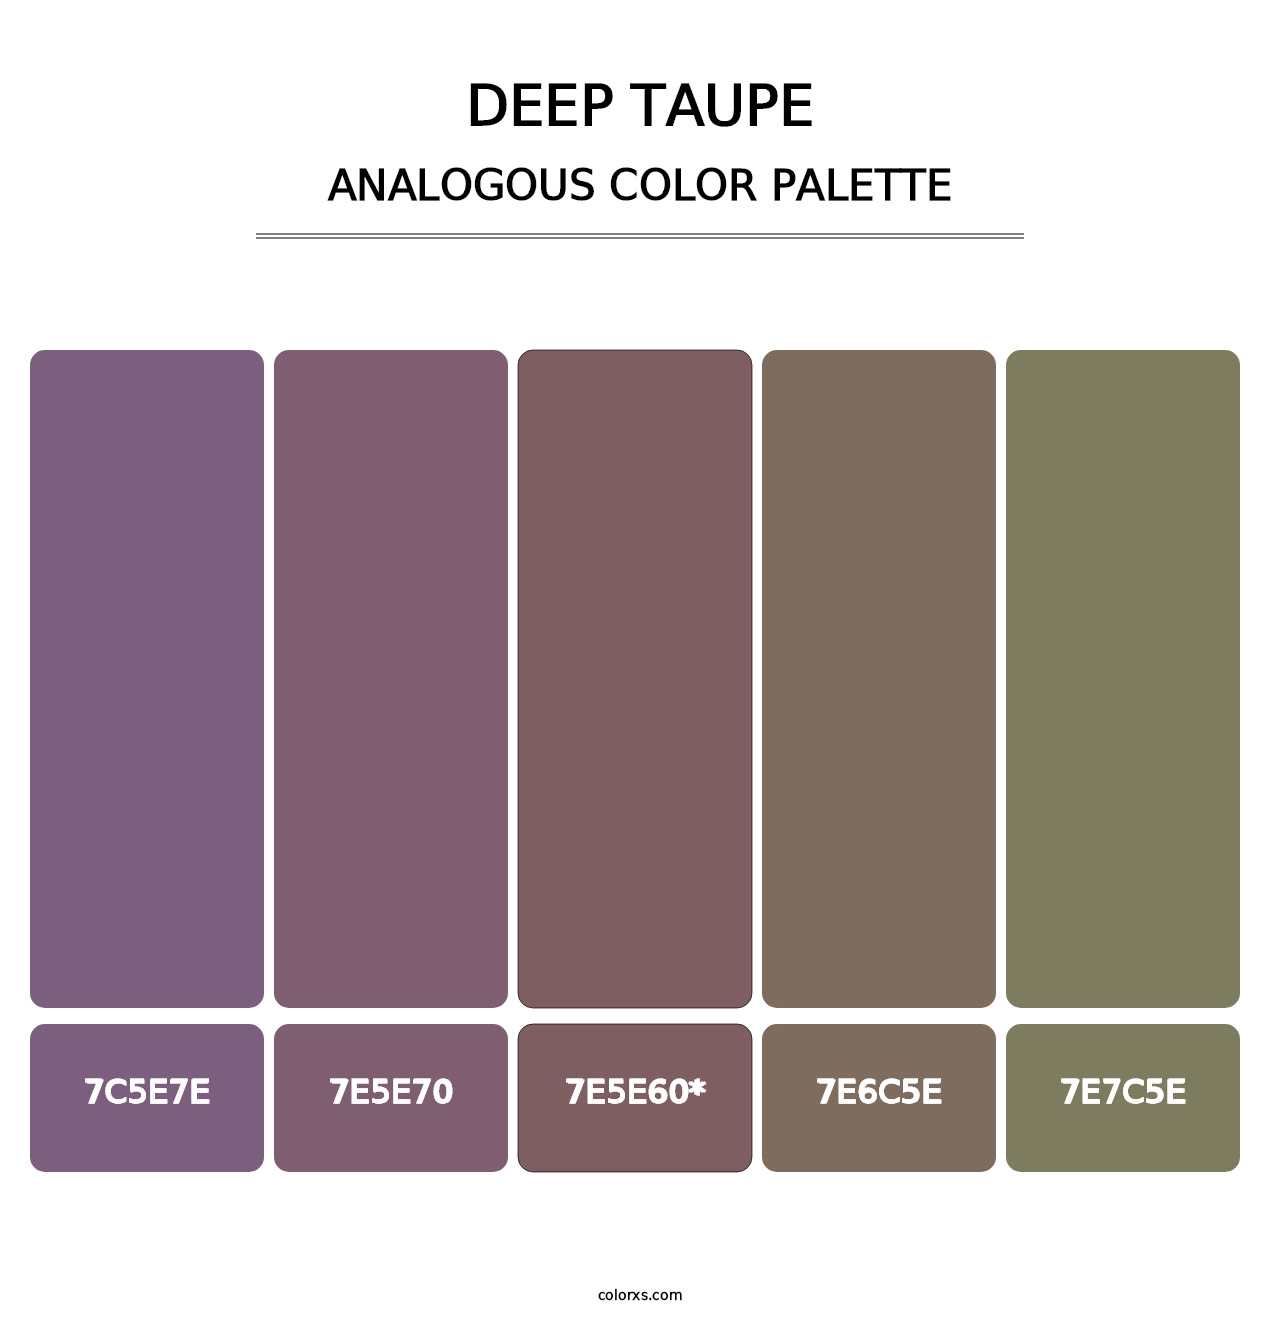 Deep Taupe - Analogous Color Palette